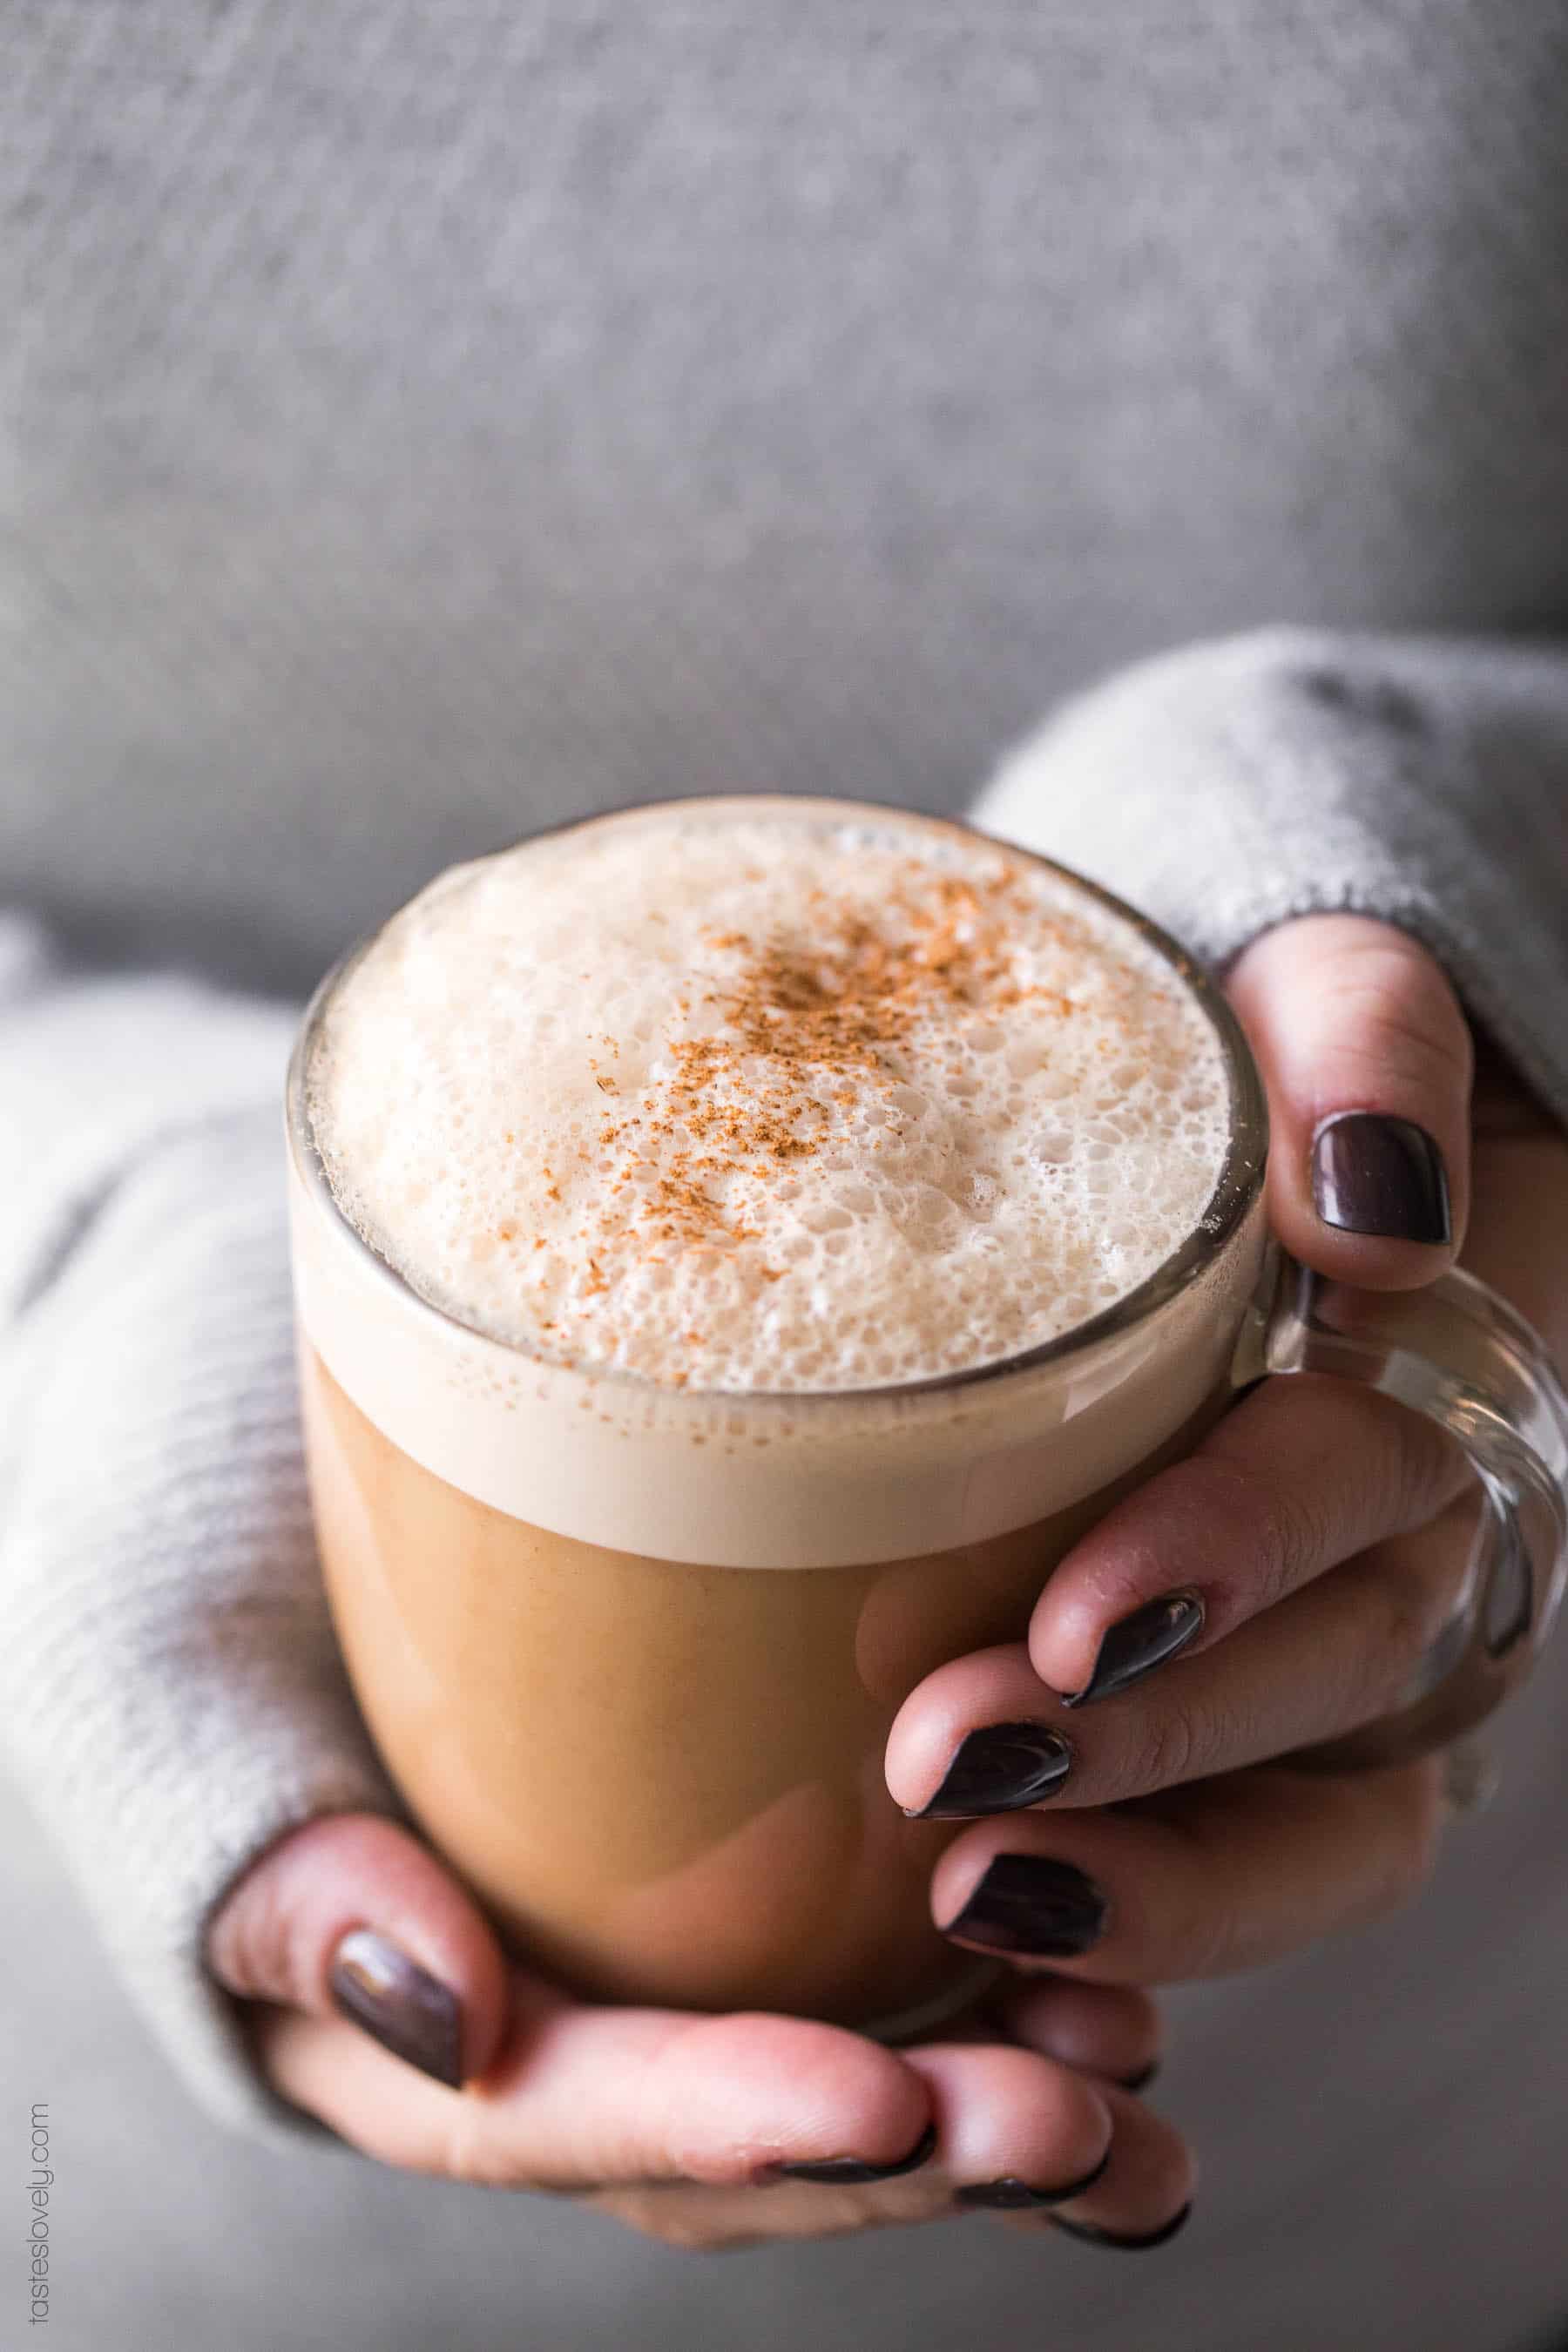 Paleo Almond Milk Chai Tea Latte (Dairy Free). Made in your blender!